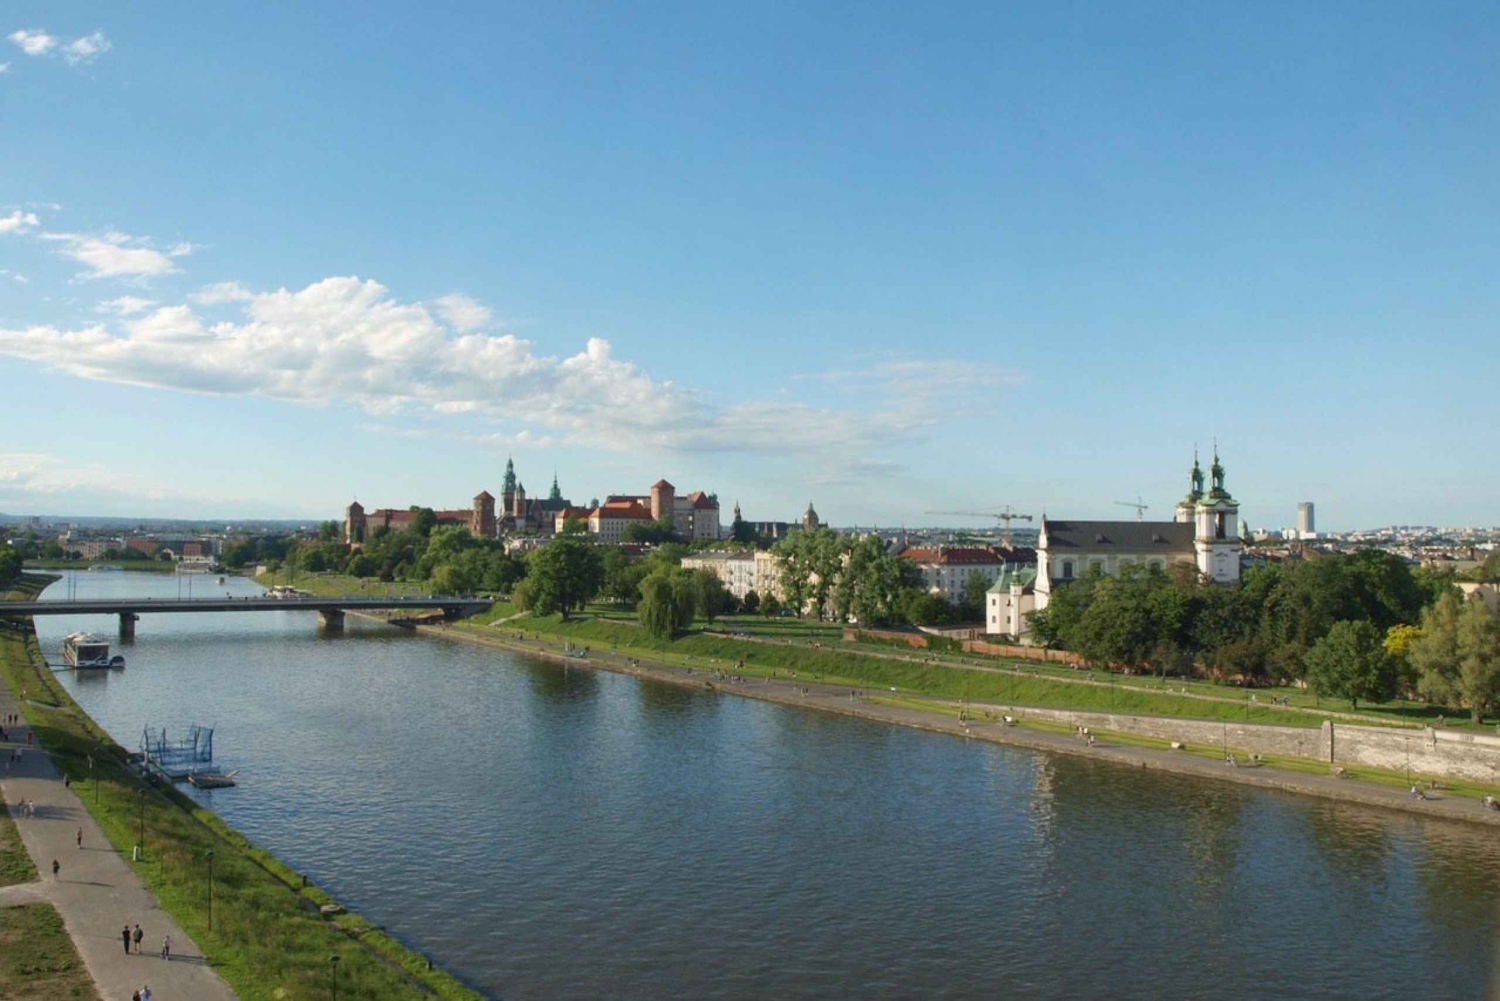 Krakow: River Cruise, Kazimiz, & Schindler's Factory Museum